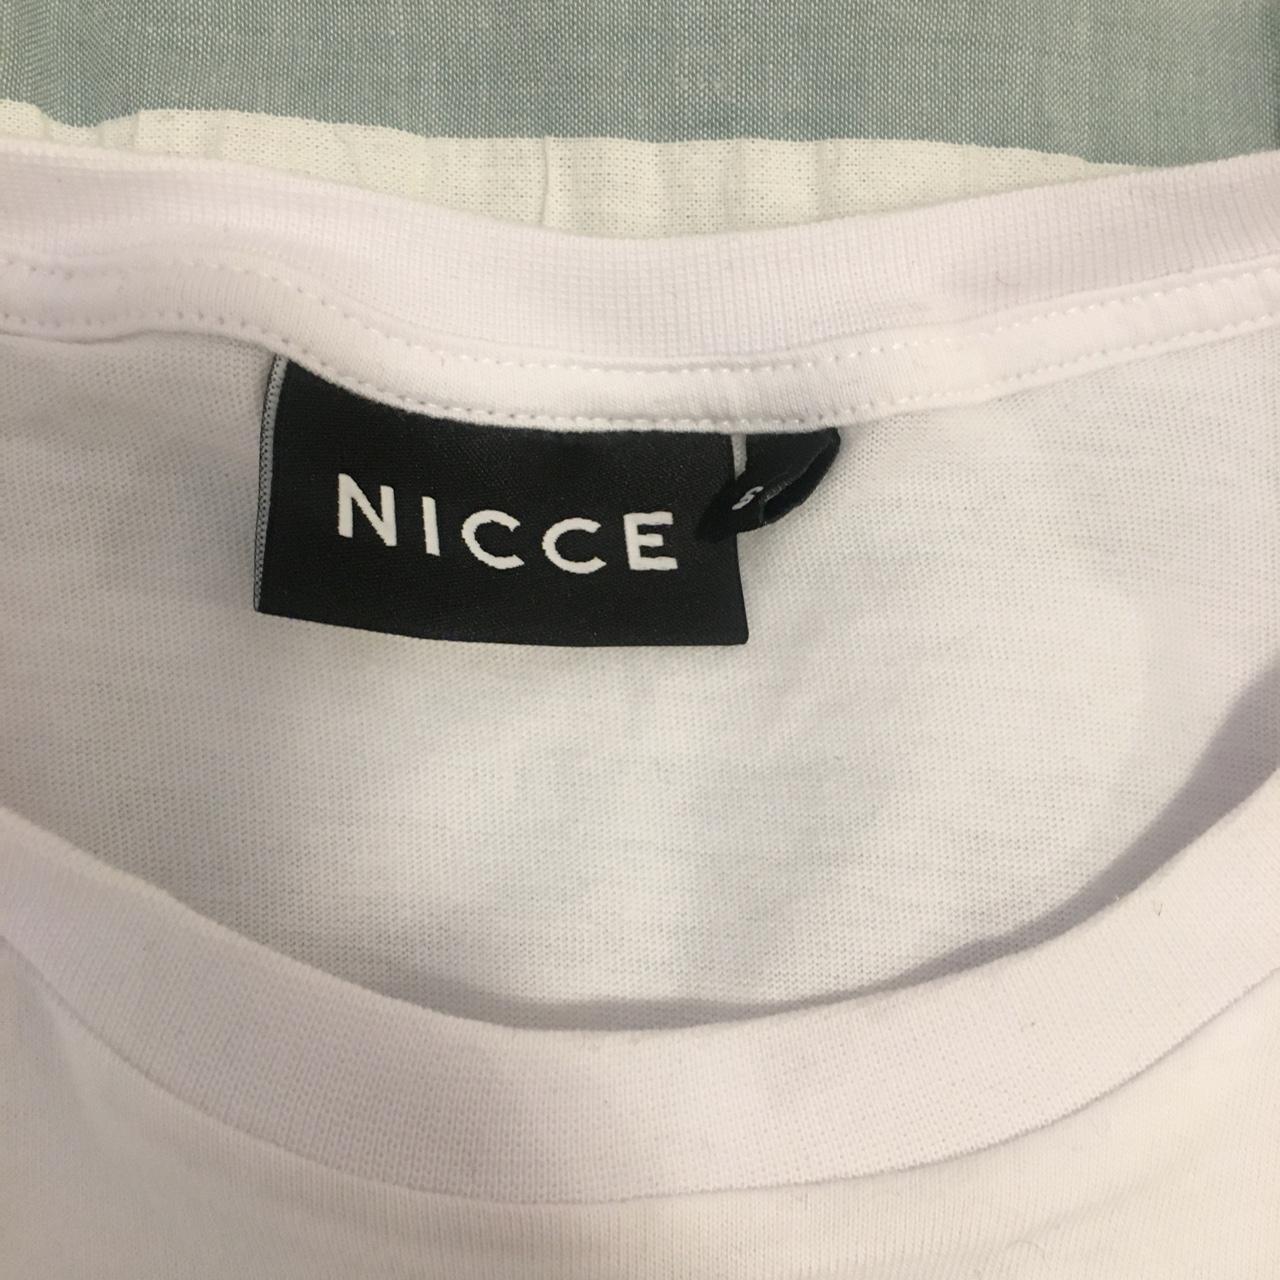 NICCE Men's White and Orange T-shirt (3)